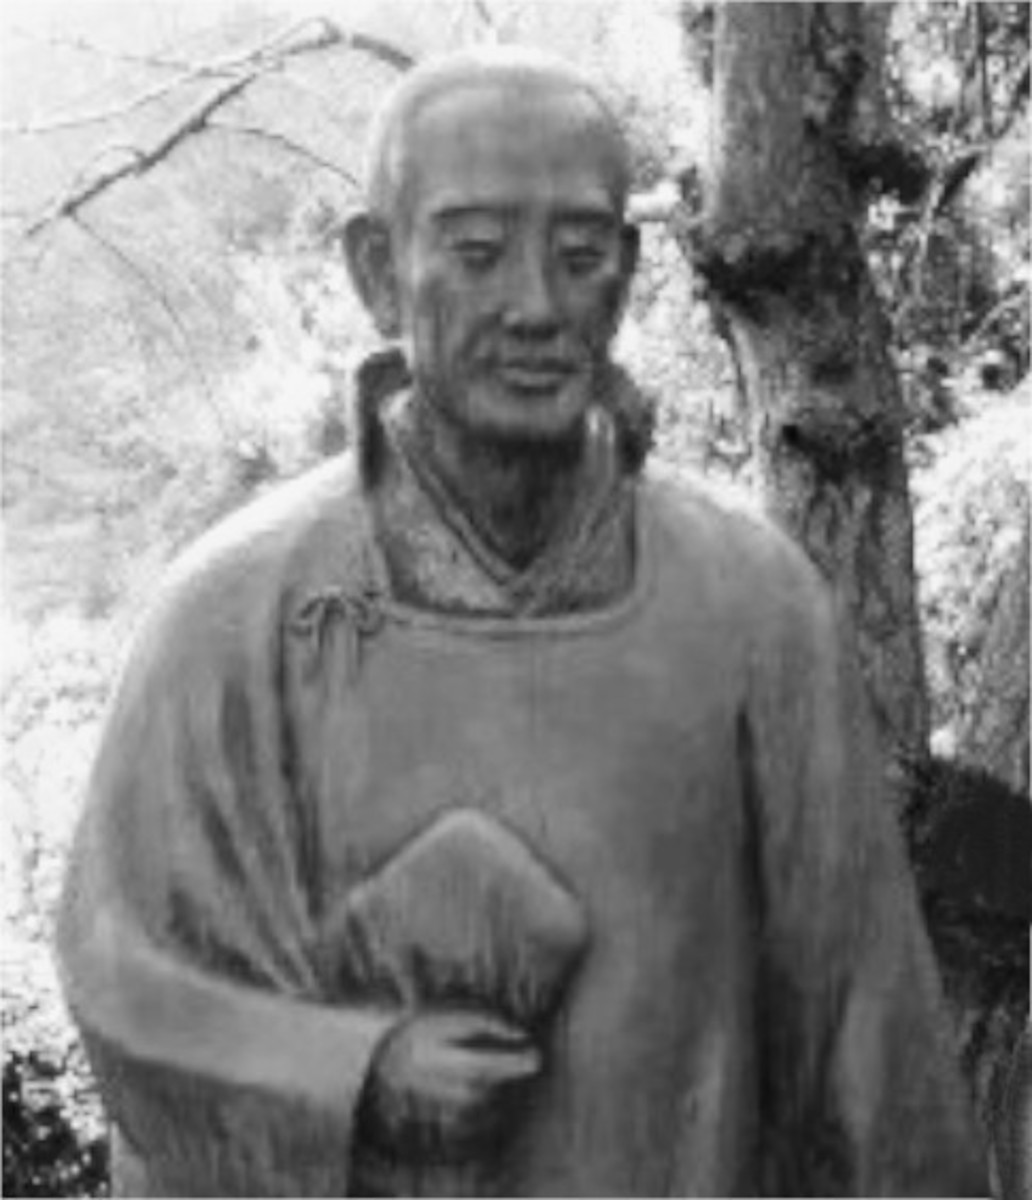 Statue of Tachibana Akemi in his home town of Futui, 